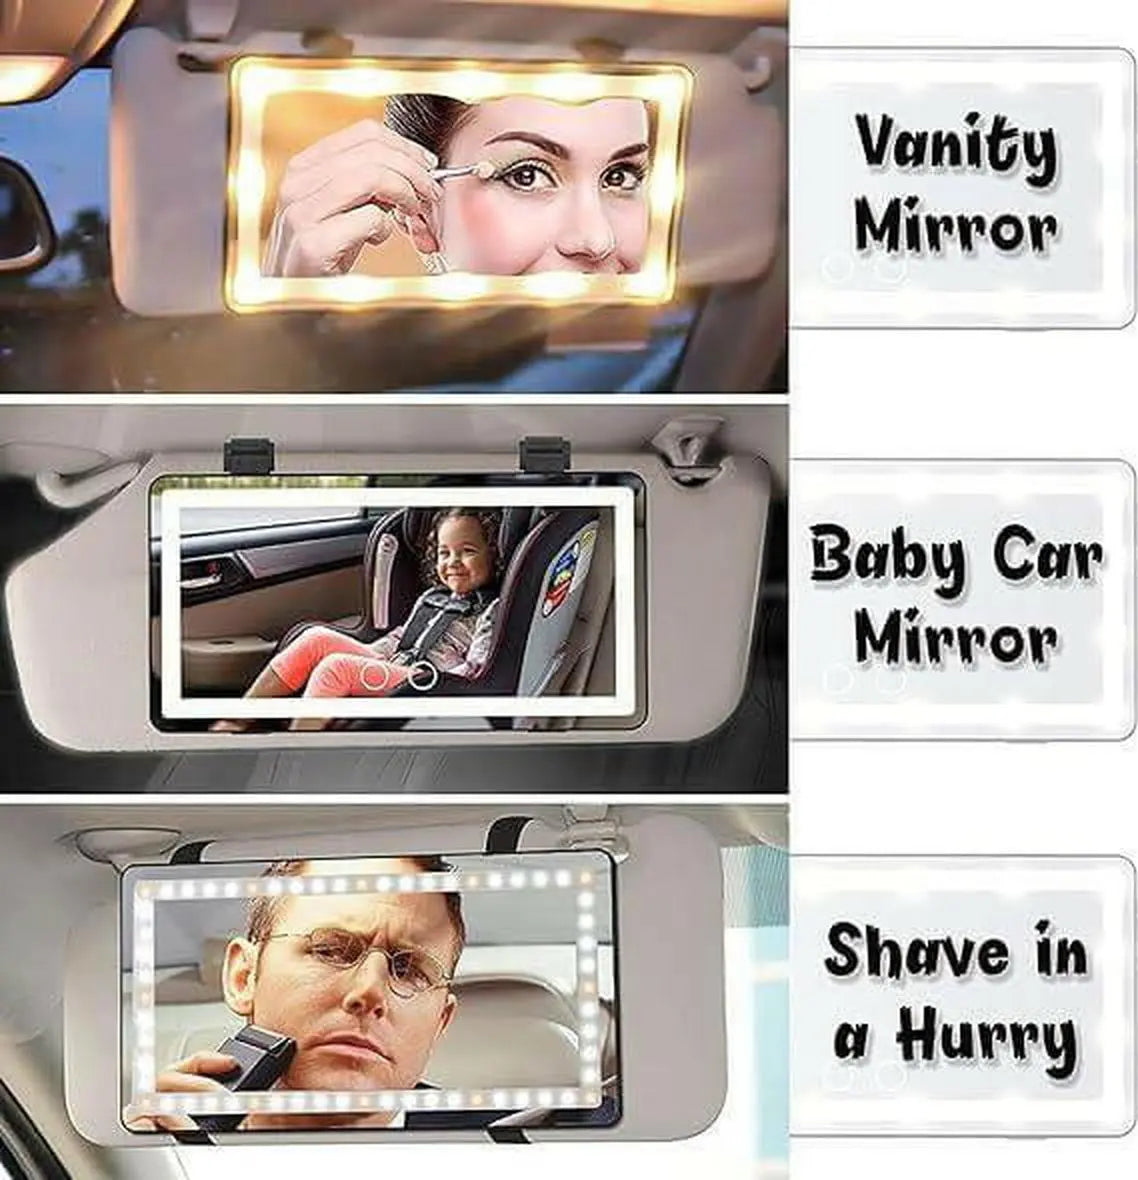 Car Visor Vanity Mirror With 3 Led Lights, Car Makeup Mirror